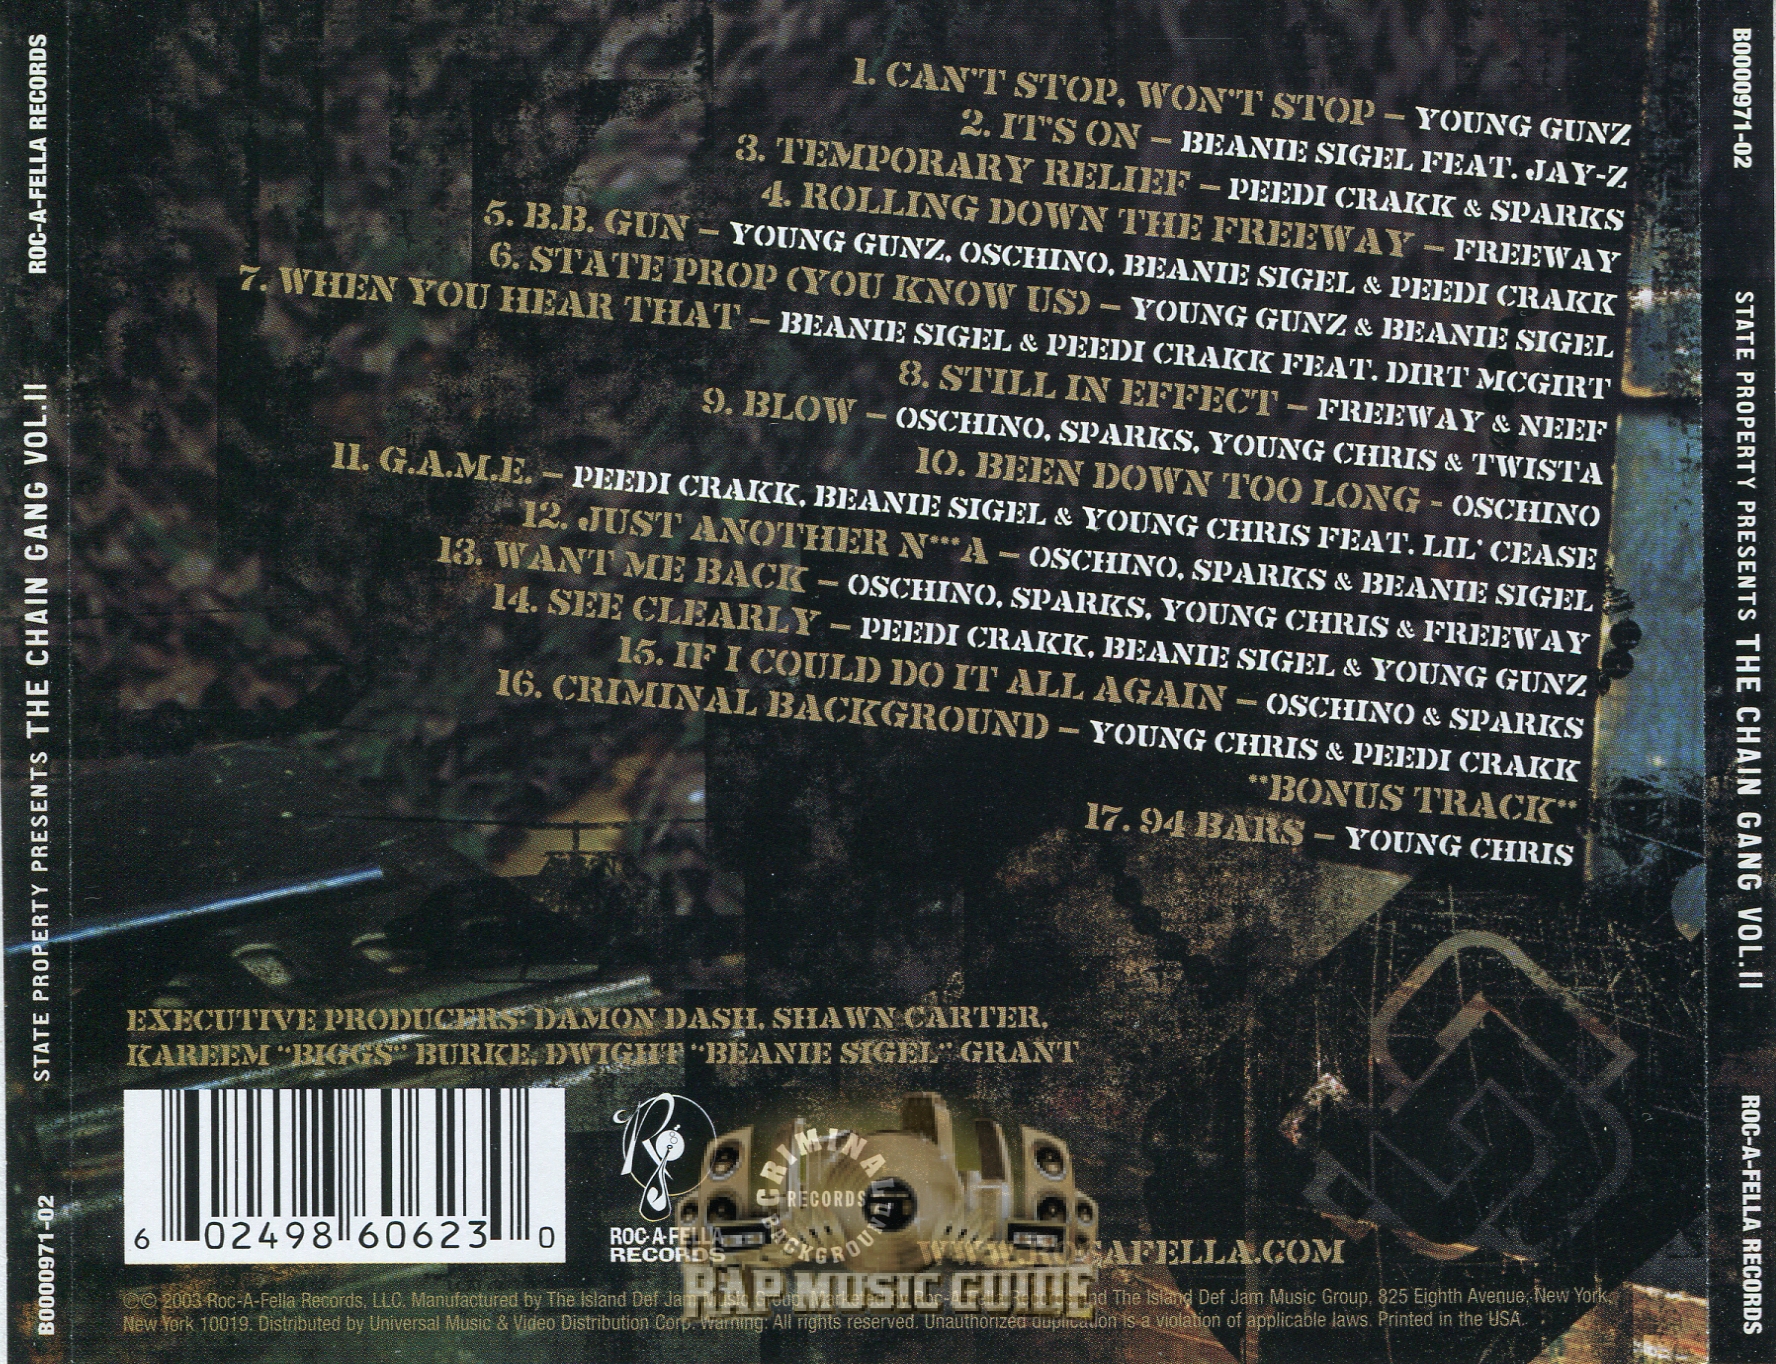 State Property Presents The Chain Gang Vol. II CD Rap